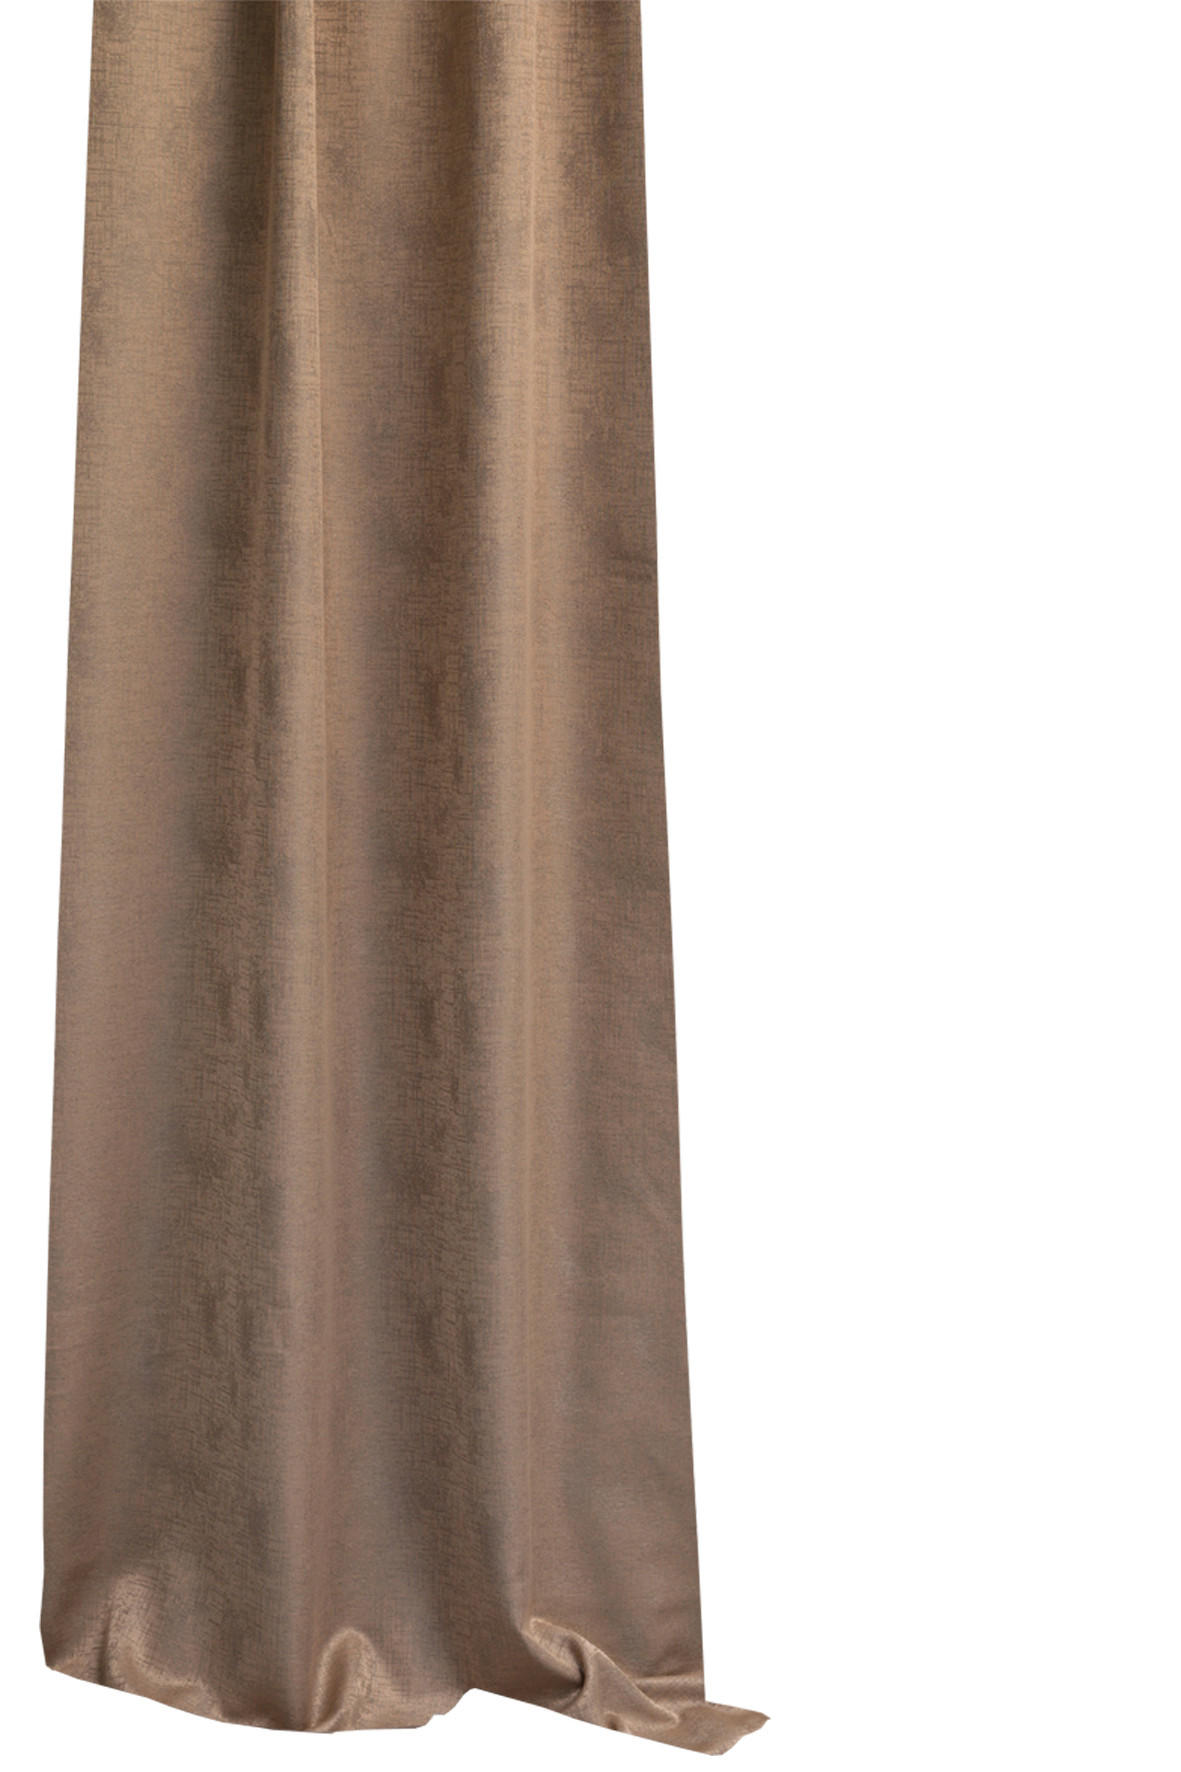 MATERIAL TEXTIL DECORATIV  - maro, Basics, textil (290cm)